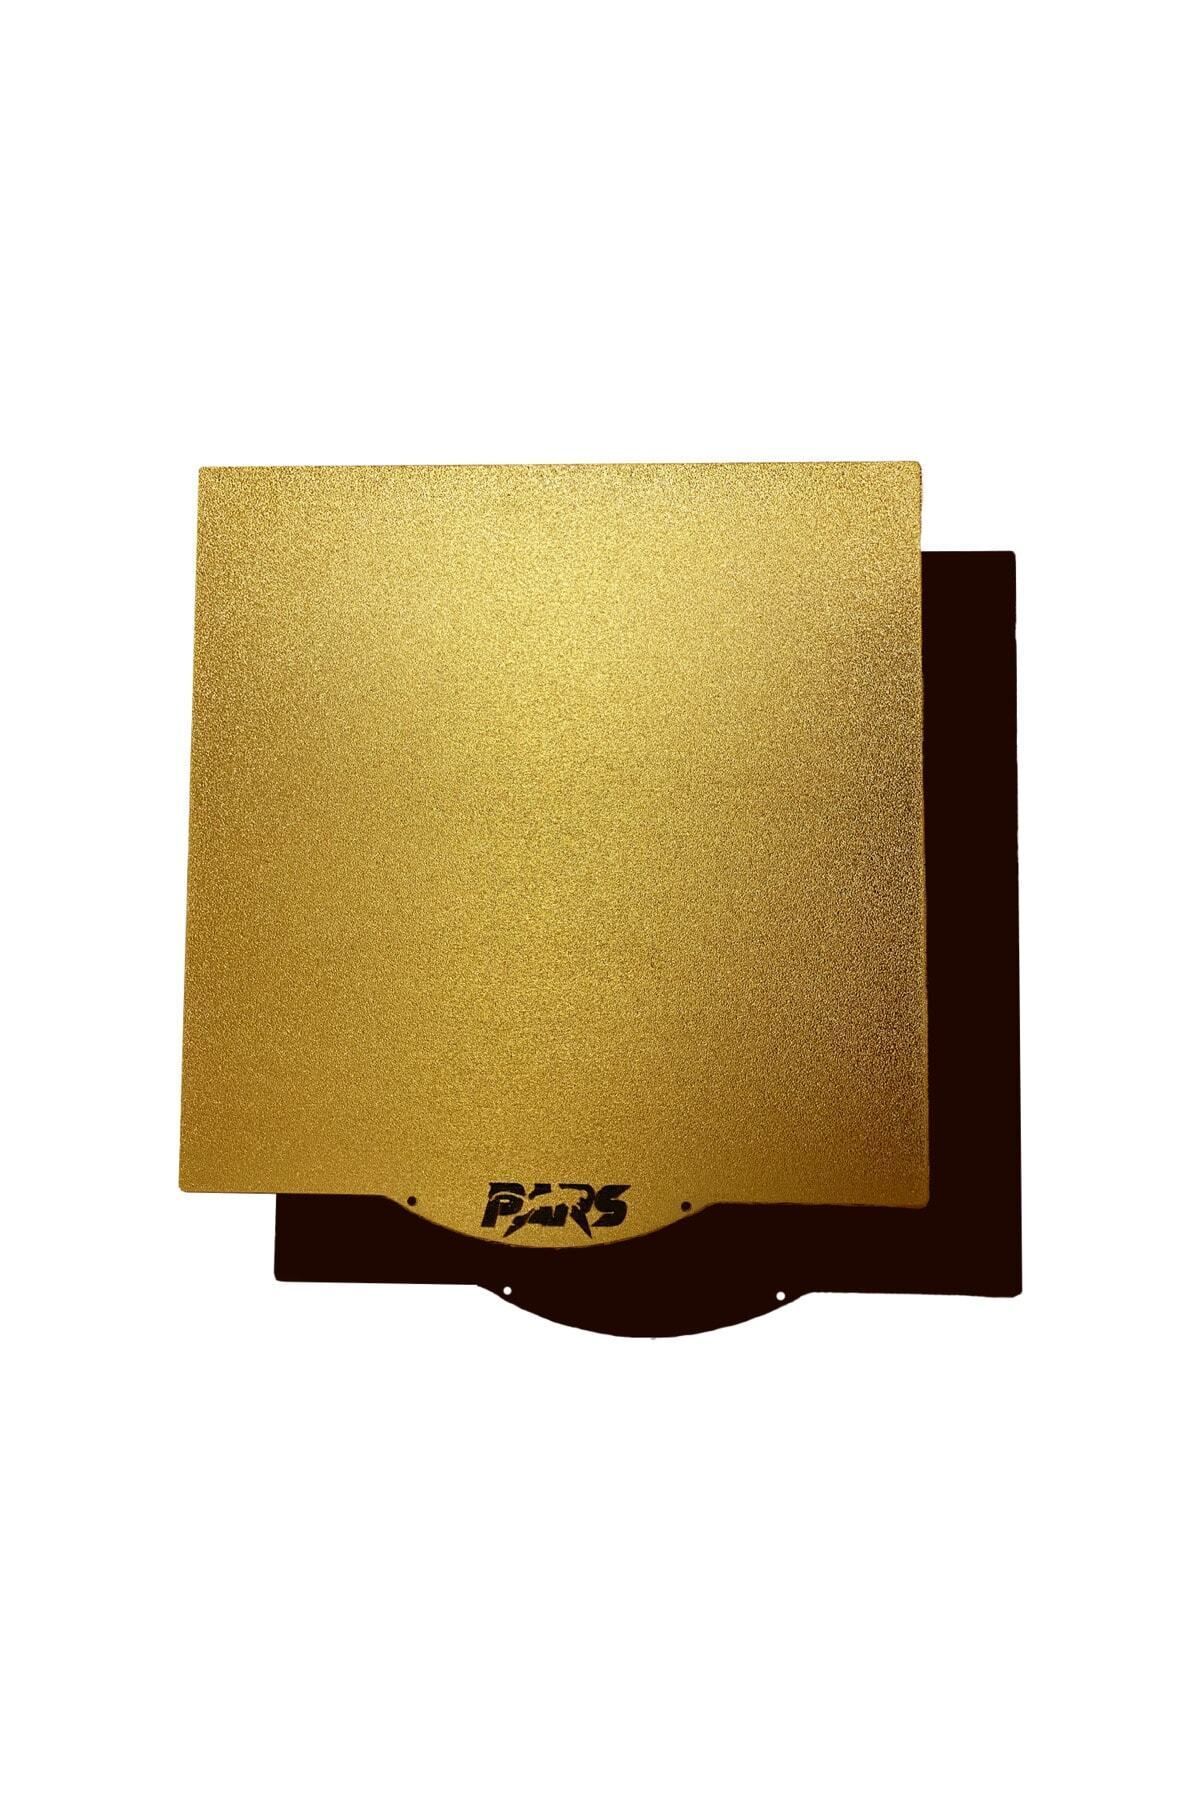 Pars 310x315 Mm Ender 3 S1 Plus Gold Pei Kaplı Özel Yay Çeliği Tabla Magnetli